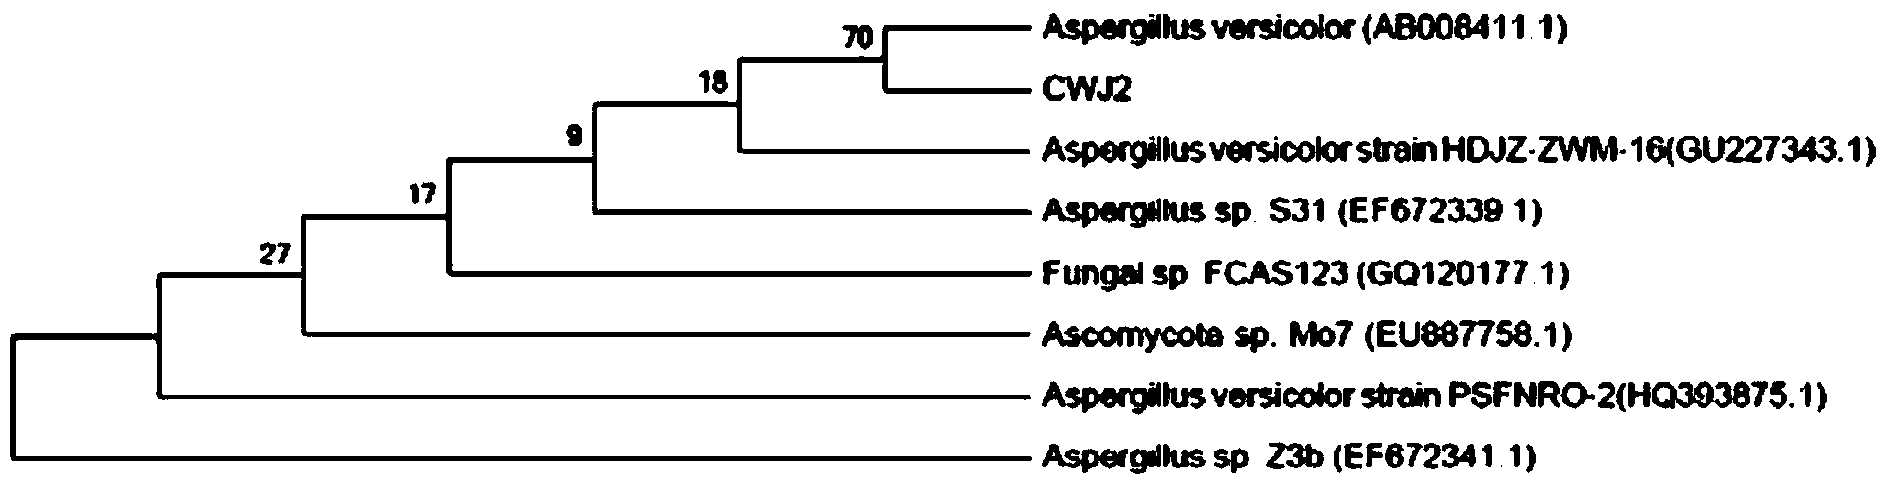 Aspergillus versicolor strain with antibacterial activity